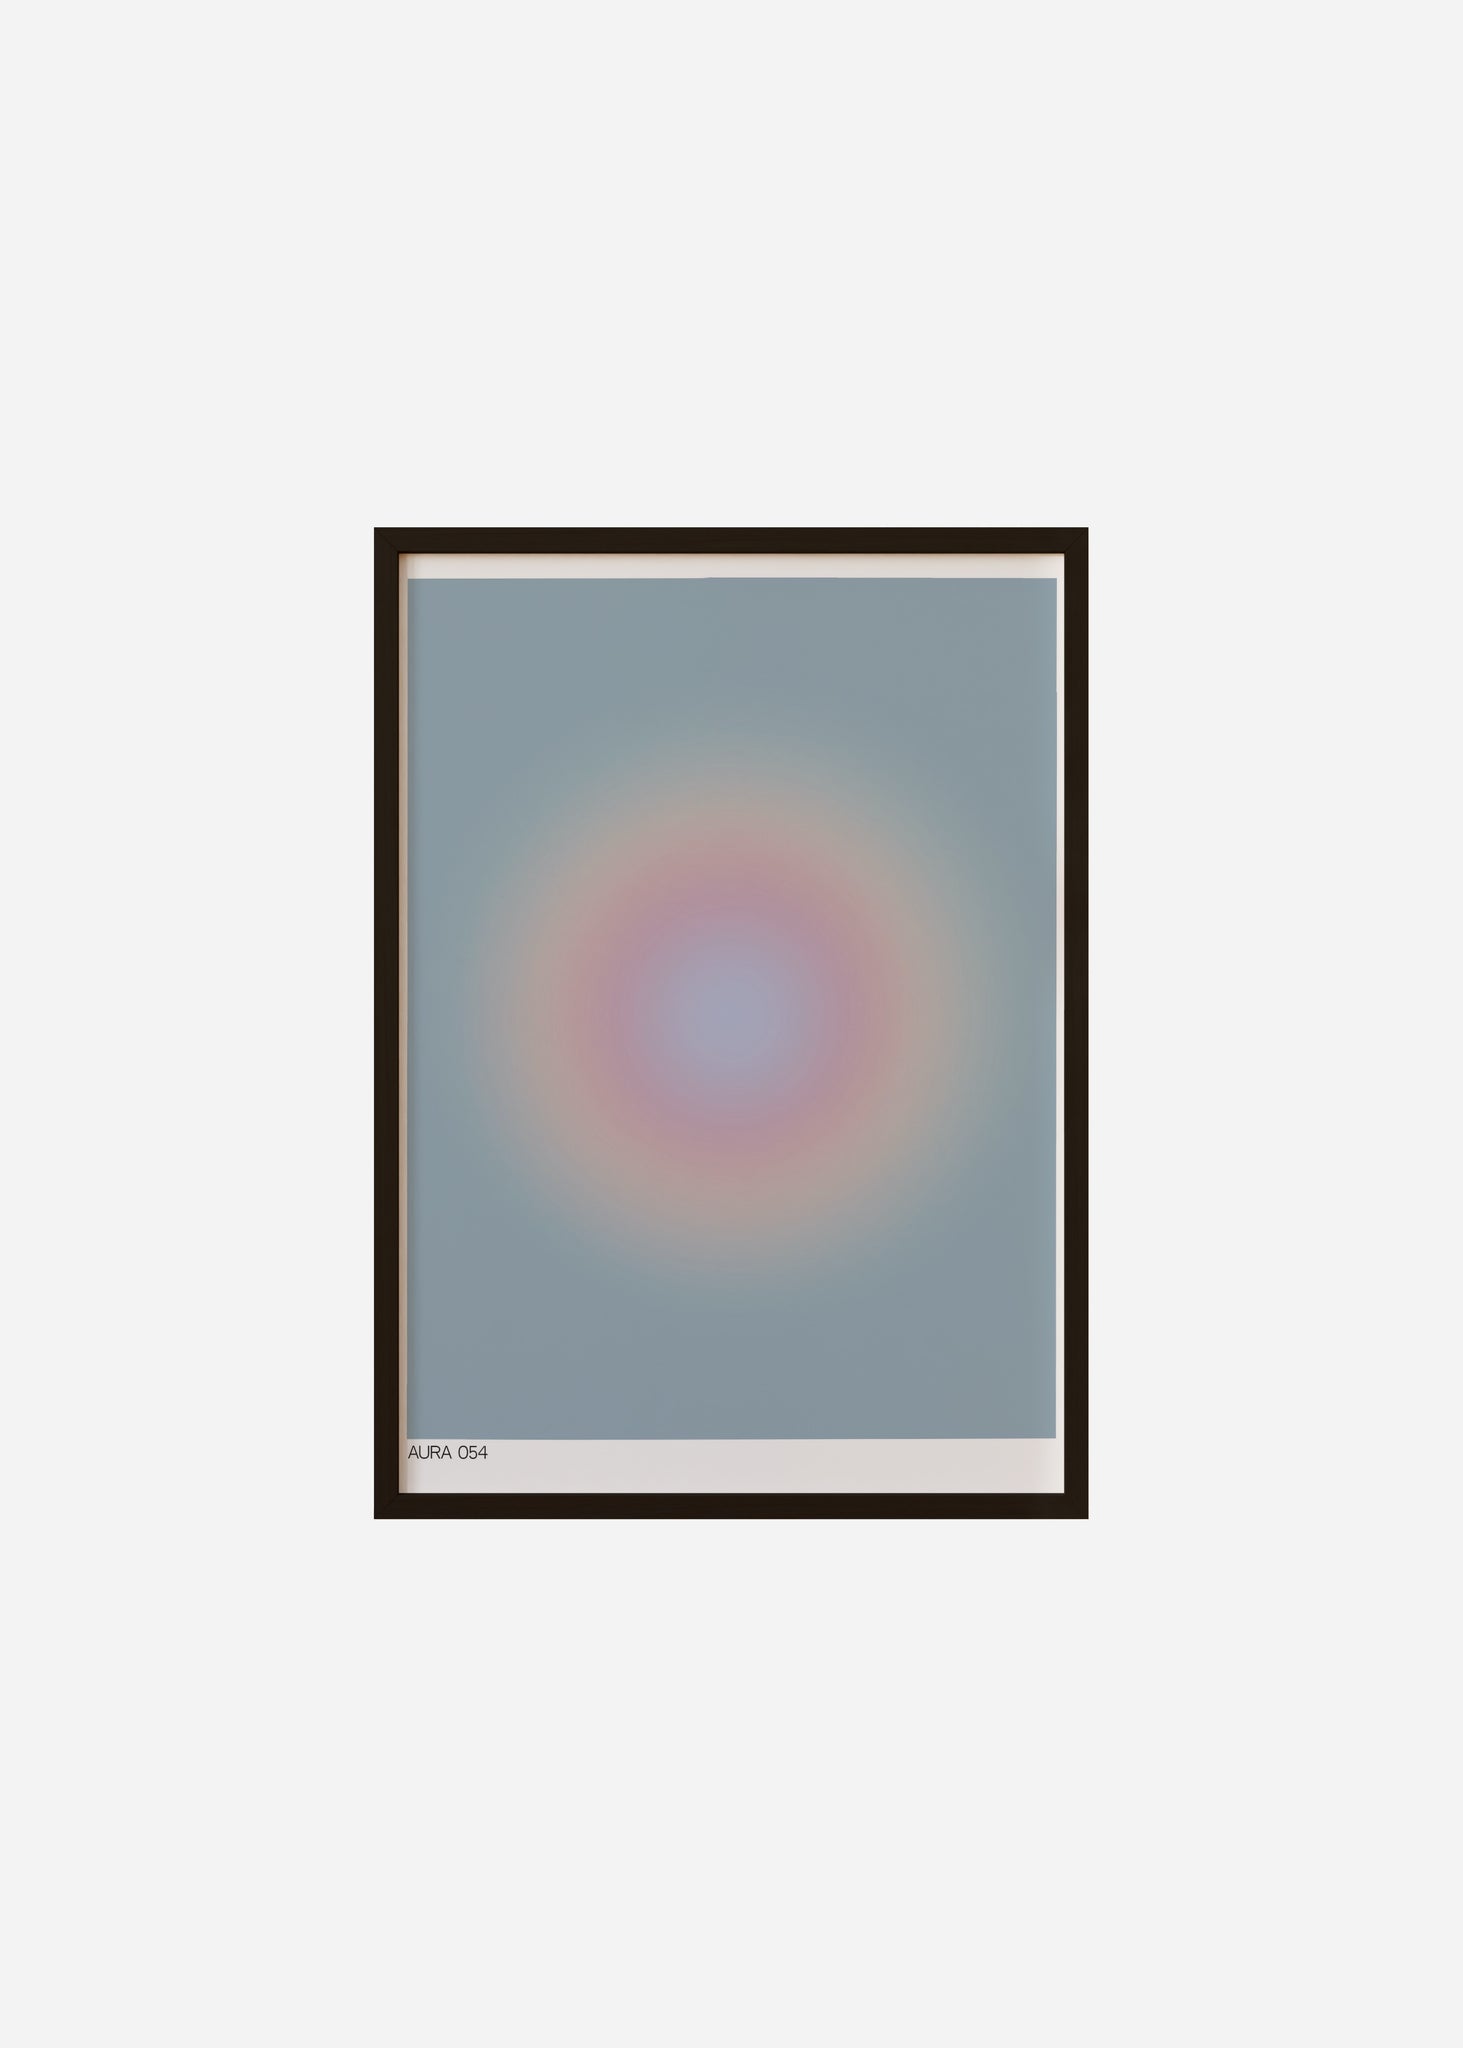 aura 054 Framed Print